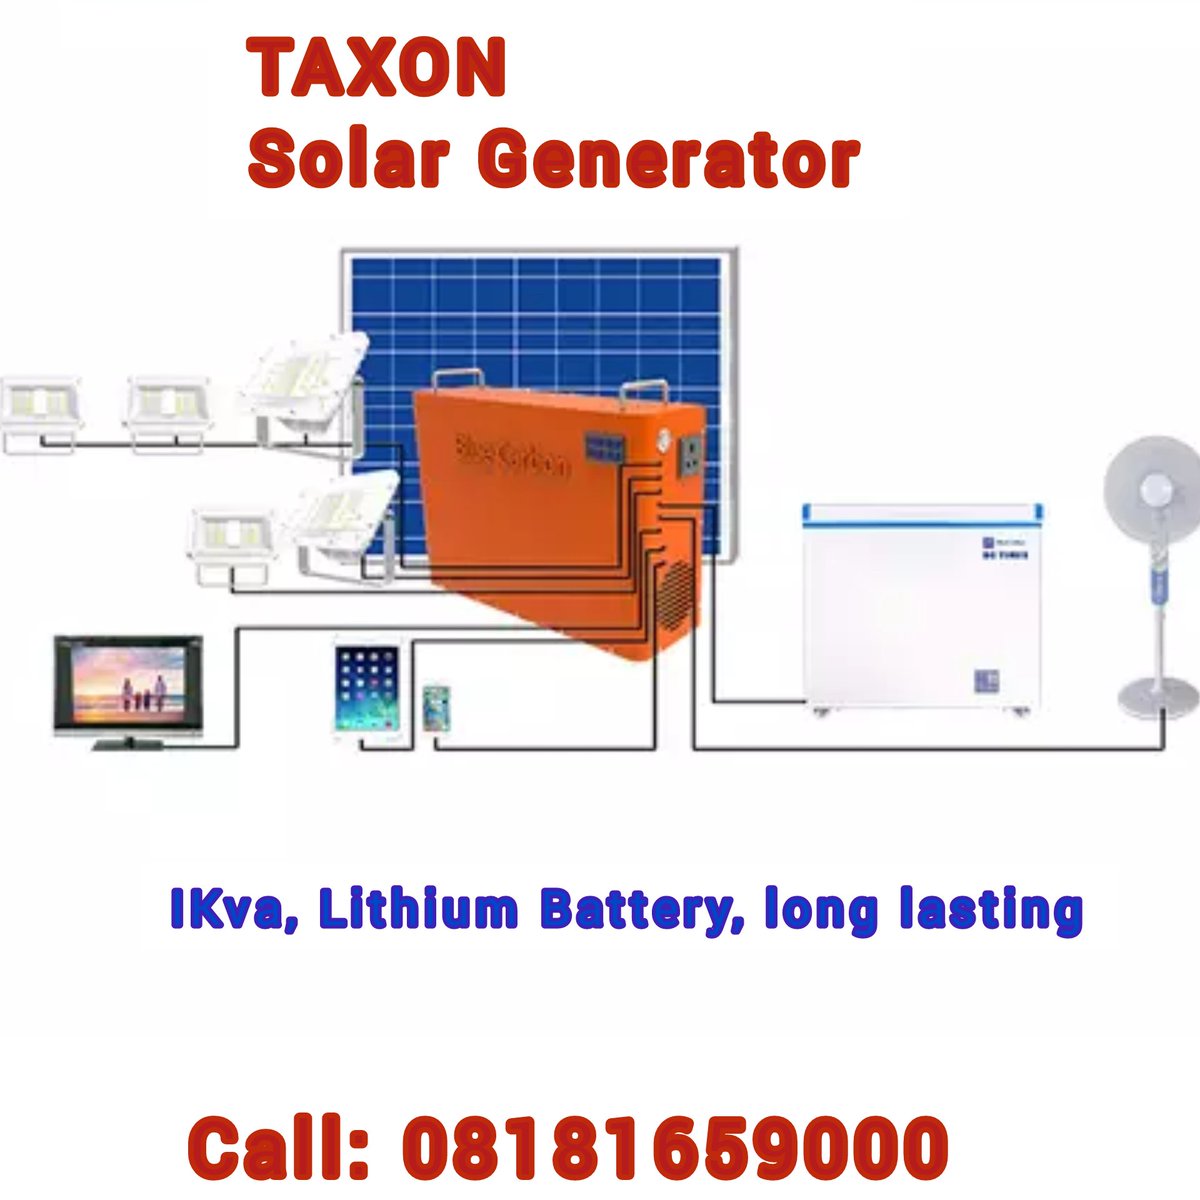 Taxon 1kva Solar Generator, long lasting with Lithium battery. 

Price: 170,000 naira
Call 08181659000

#solarenergy
#renewableenergy
#lithiumbattery
#nigerians
#Nigeria
#energybooster 
#nigerians 
#lekkiwives 
#lekki 
#ajah 
#ajahlagos 
#bananaisland 
#abujabusiness 
#asokoro